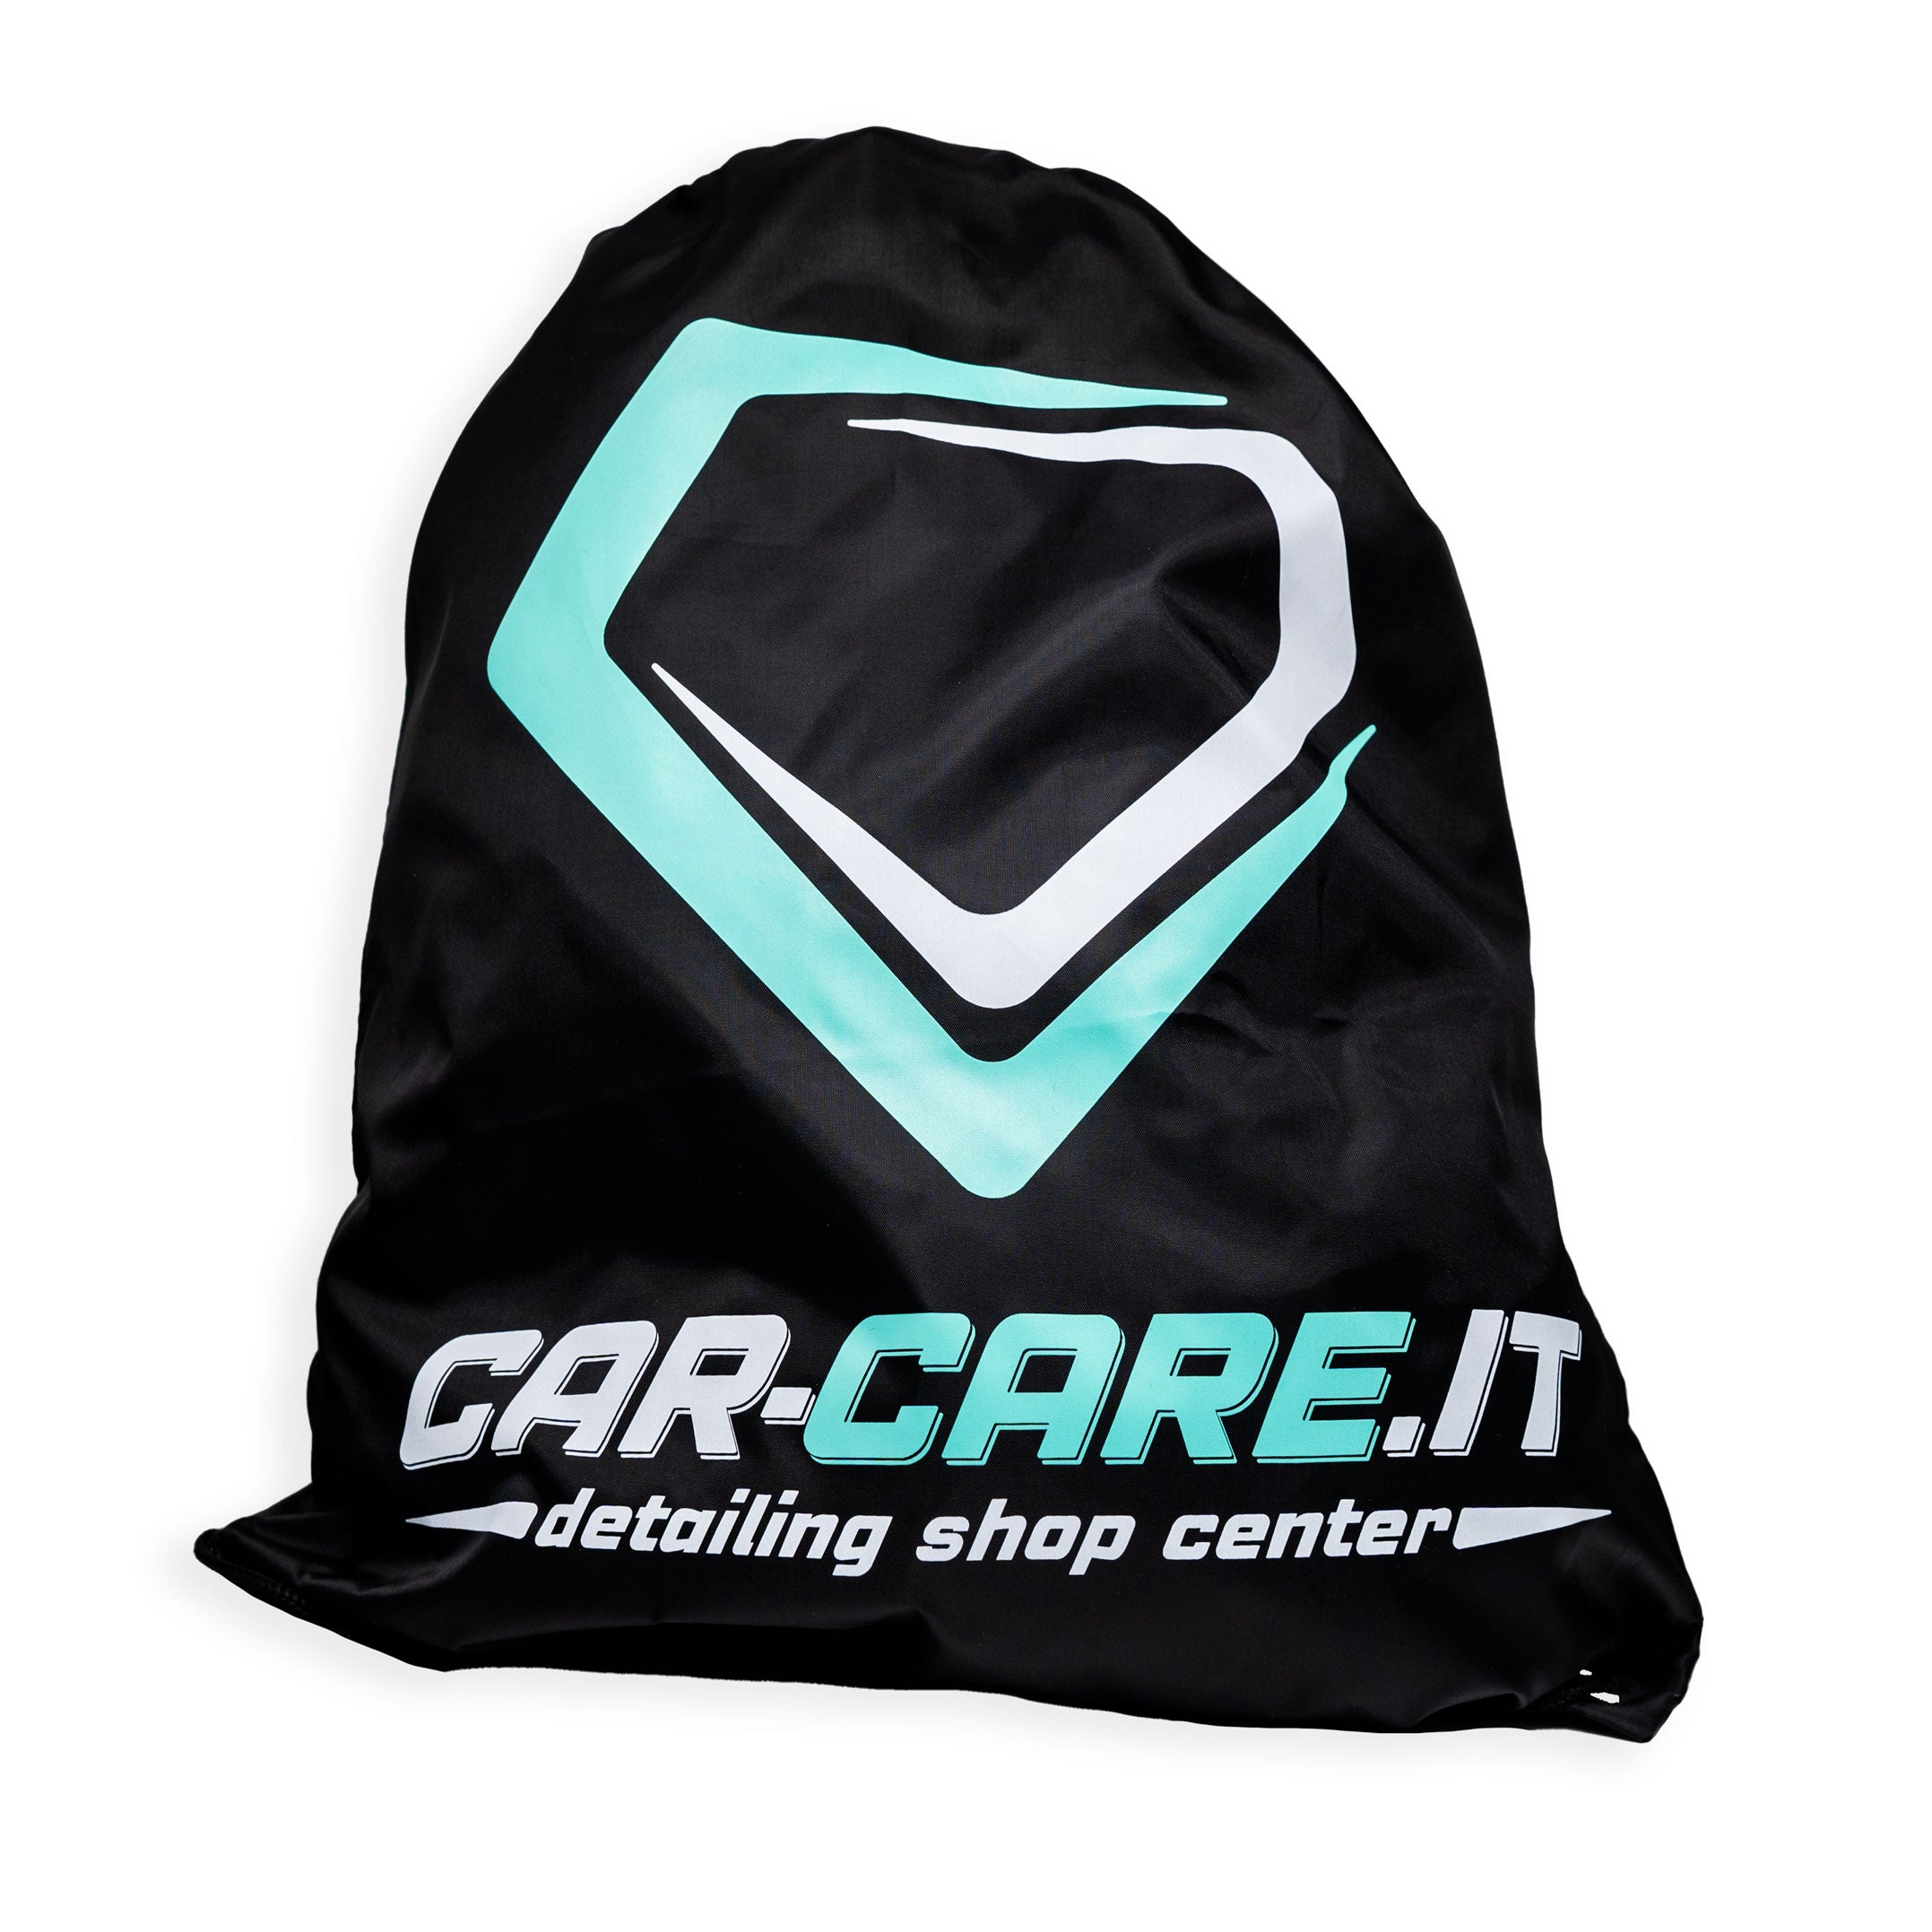 Zainetto a sacca con logo Car-Care.it - Car-Care.it Detailing